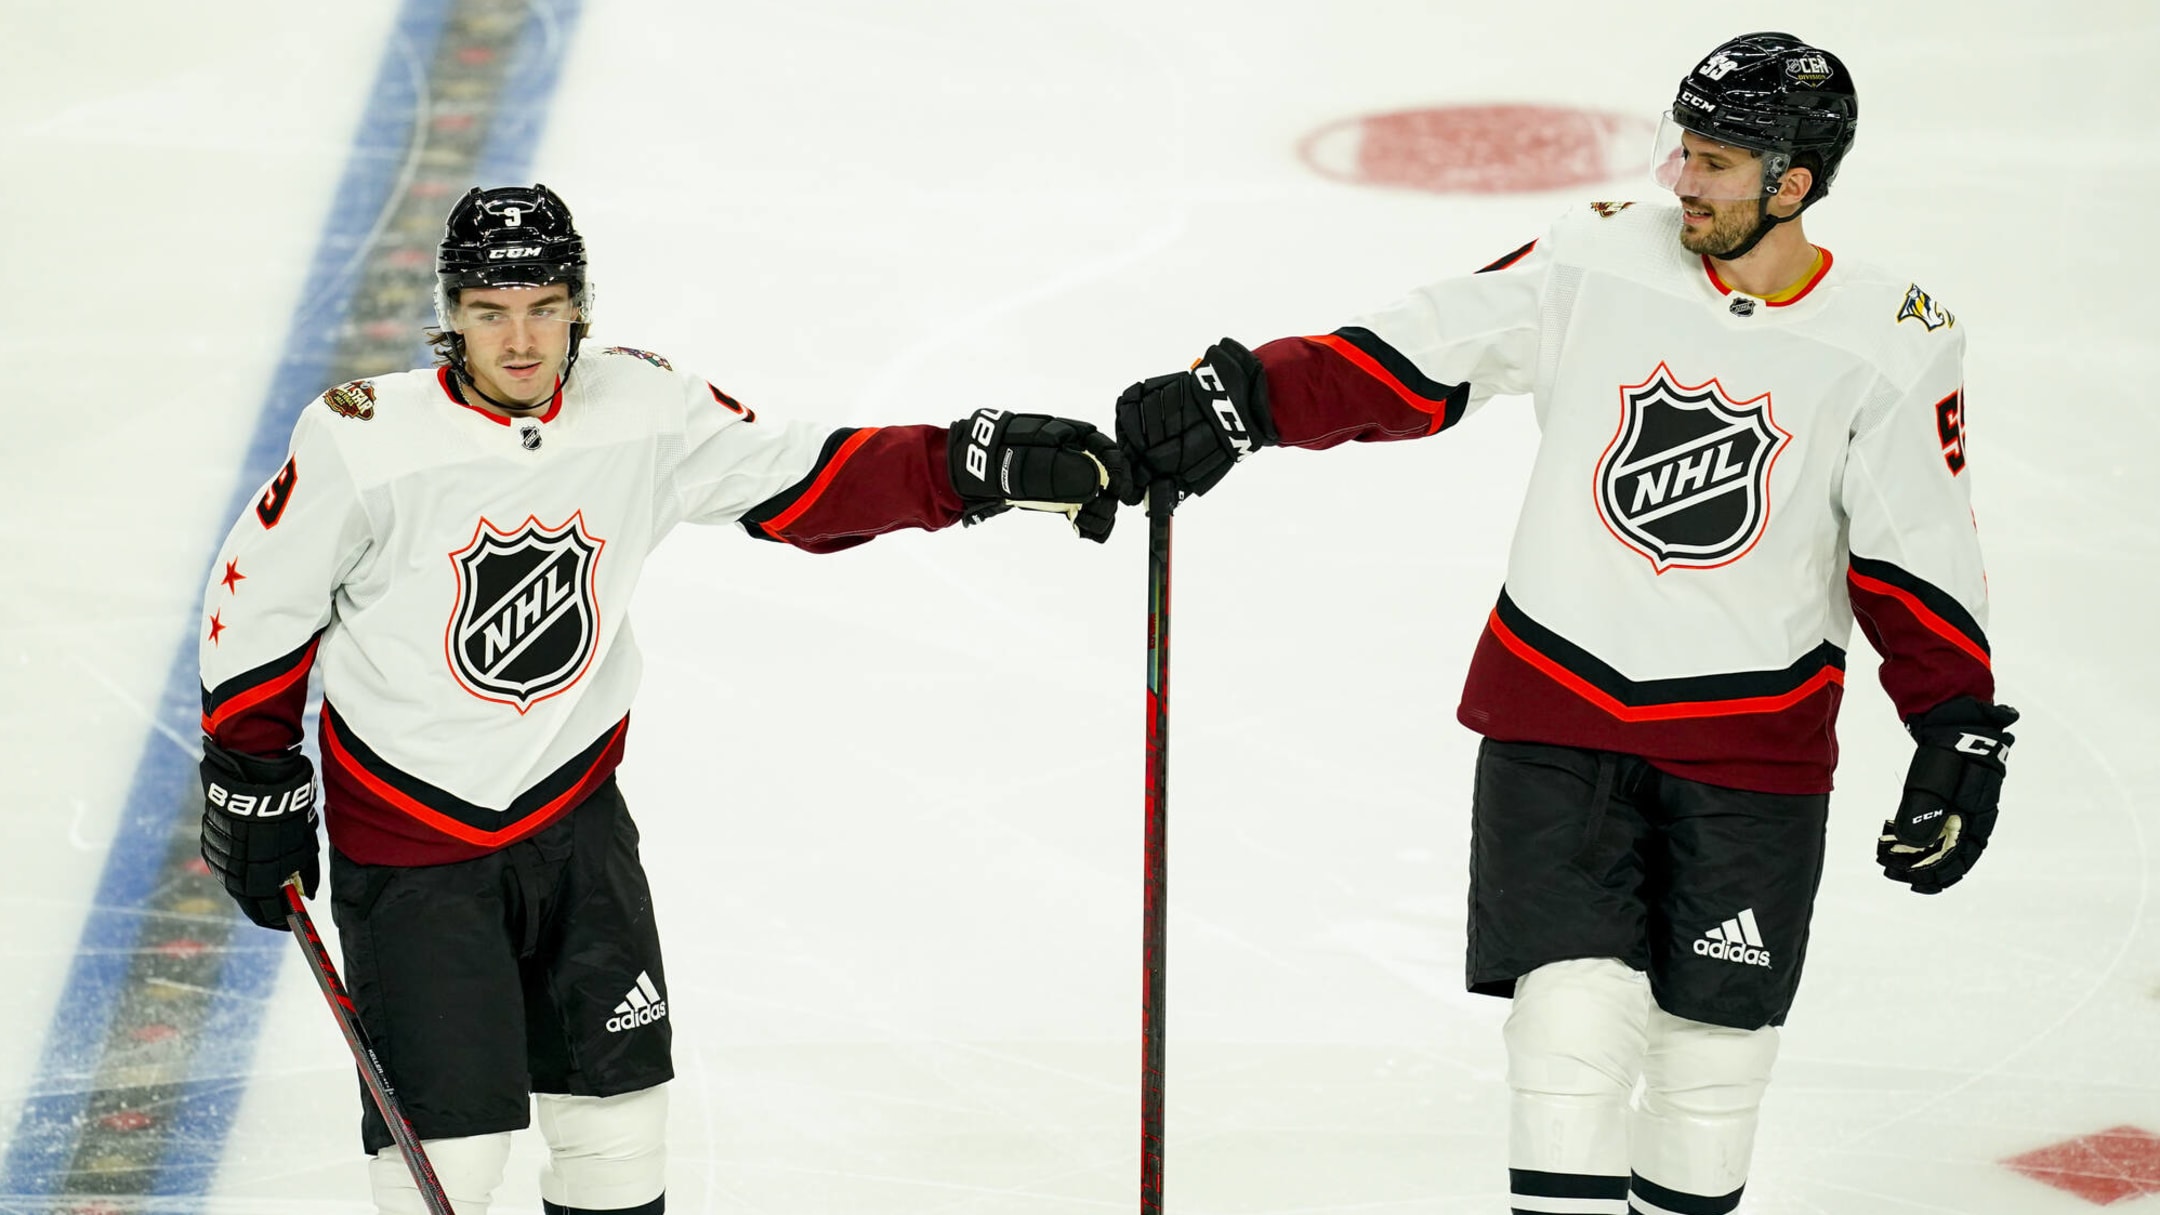 2018 NHL All-Star Game Uniforms Unveiled – SportsLogos.Net News